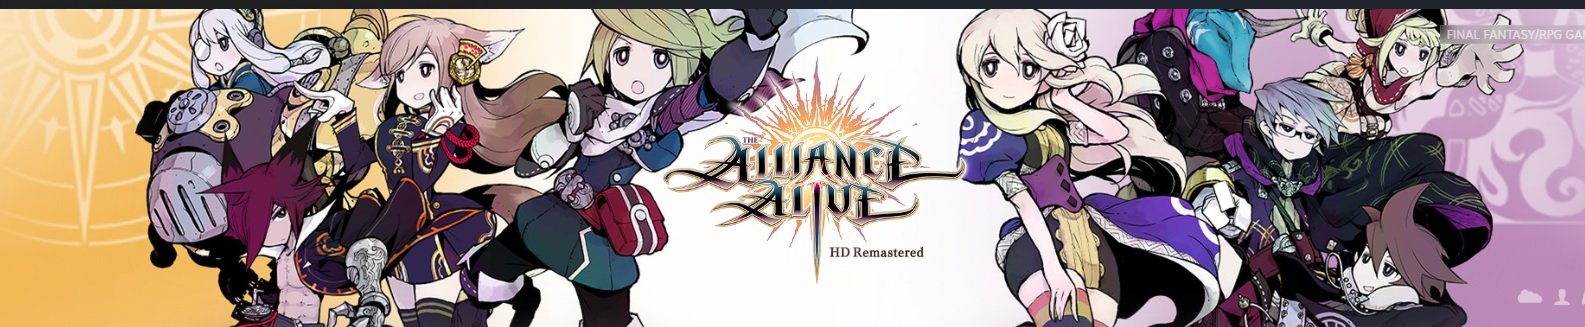 Alliance Alive Remastered Screenshot.jpg